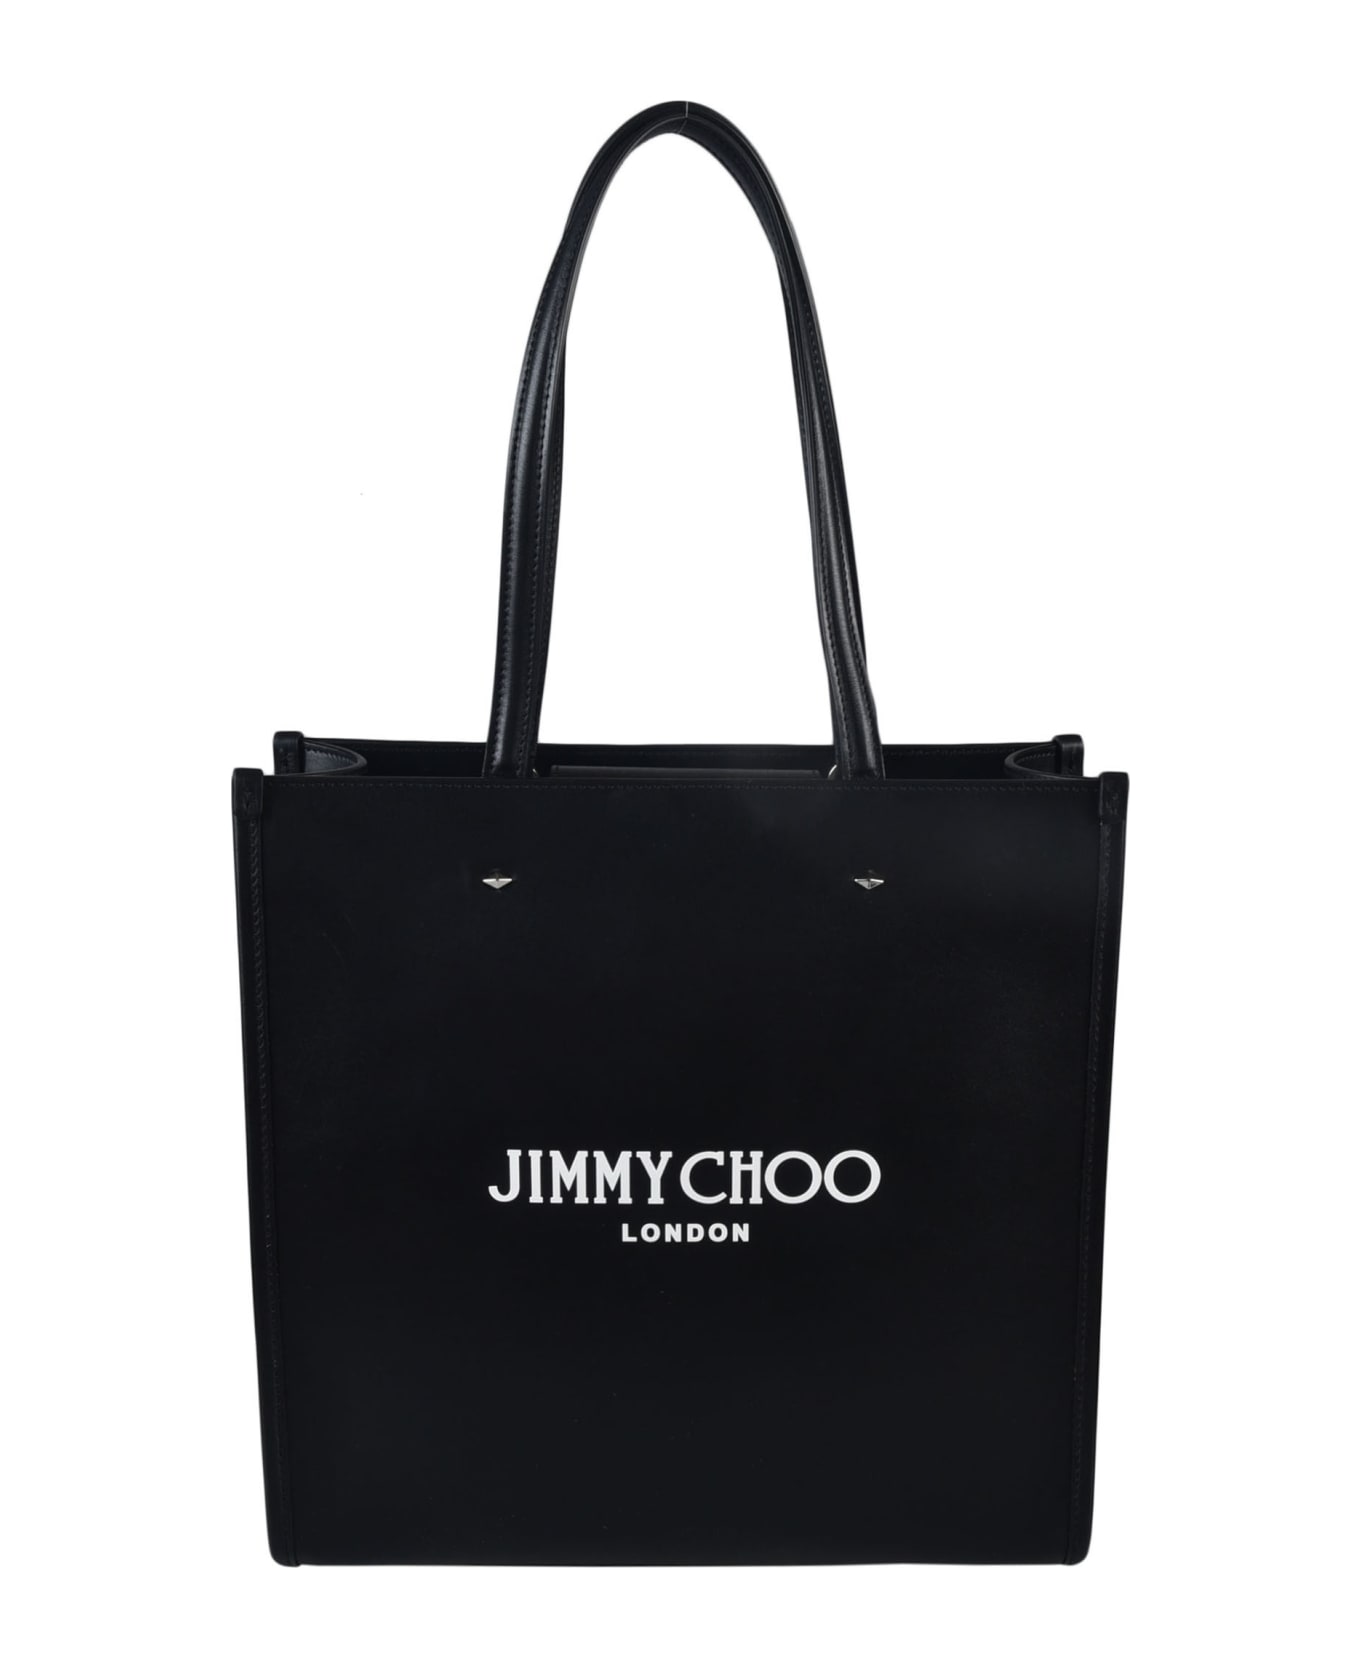 Jimmy Choo Logo Printed Tote - Black/White/Silver トートバッグ